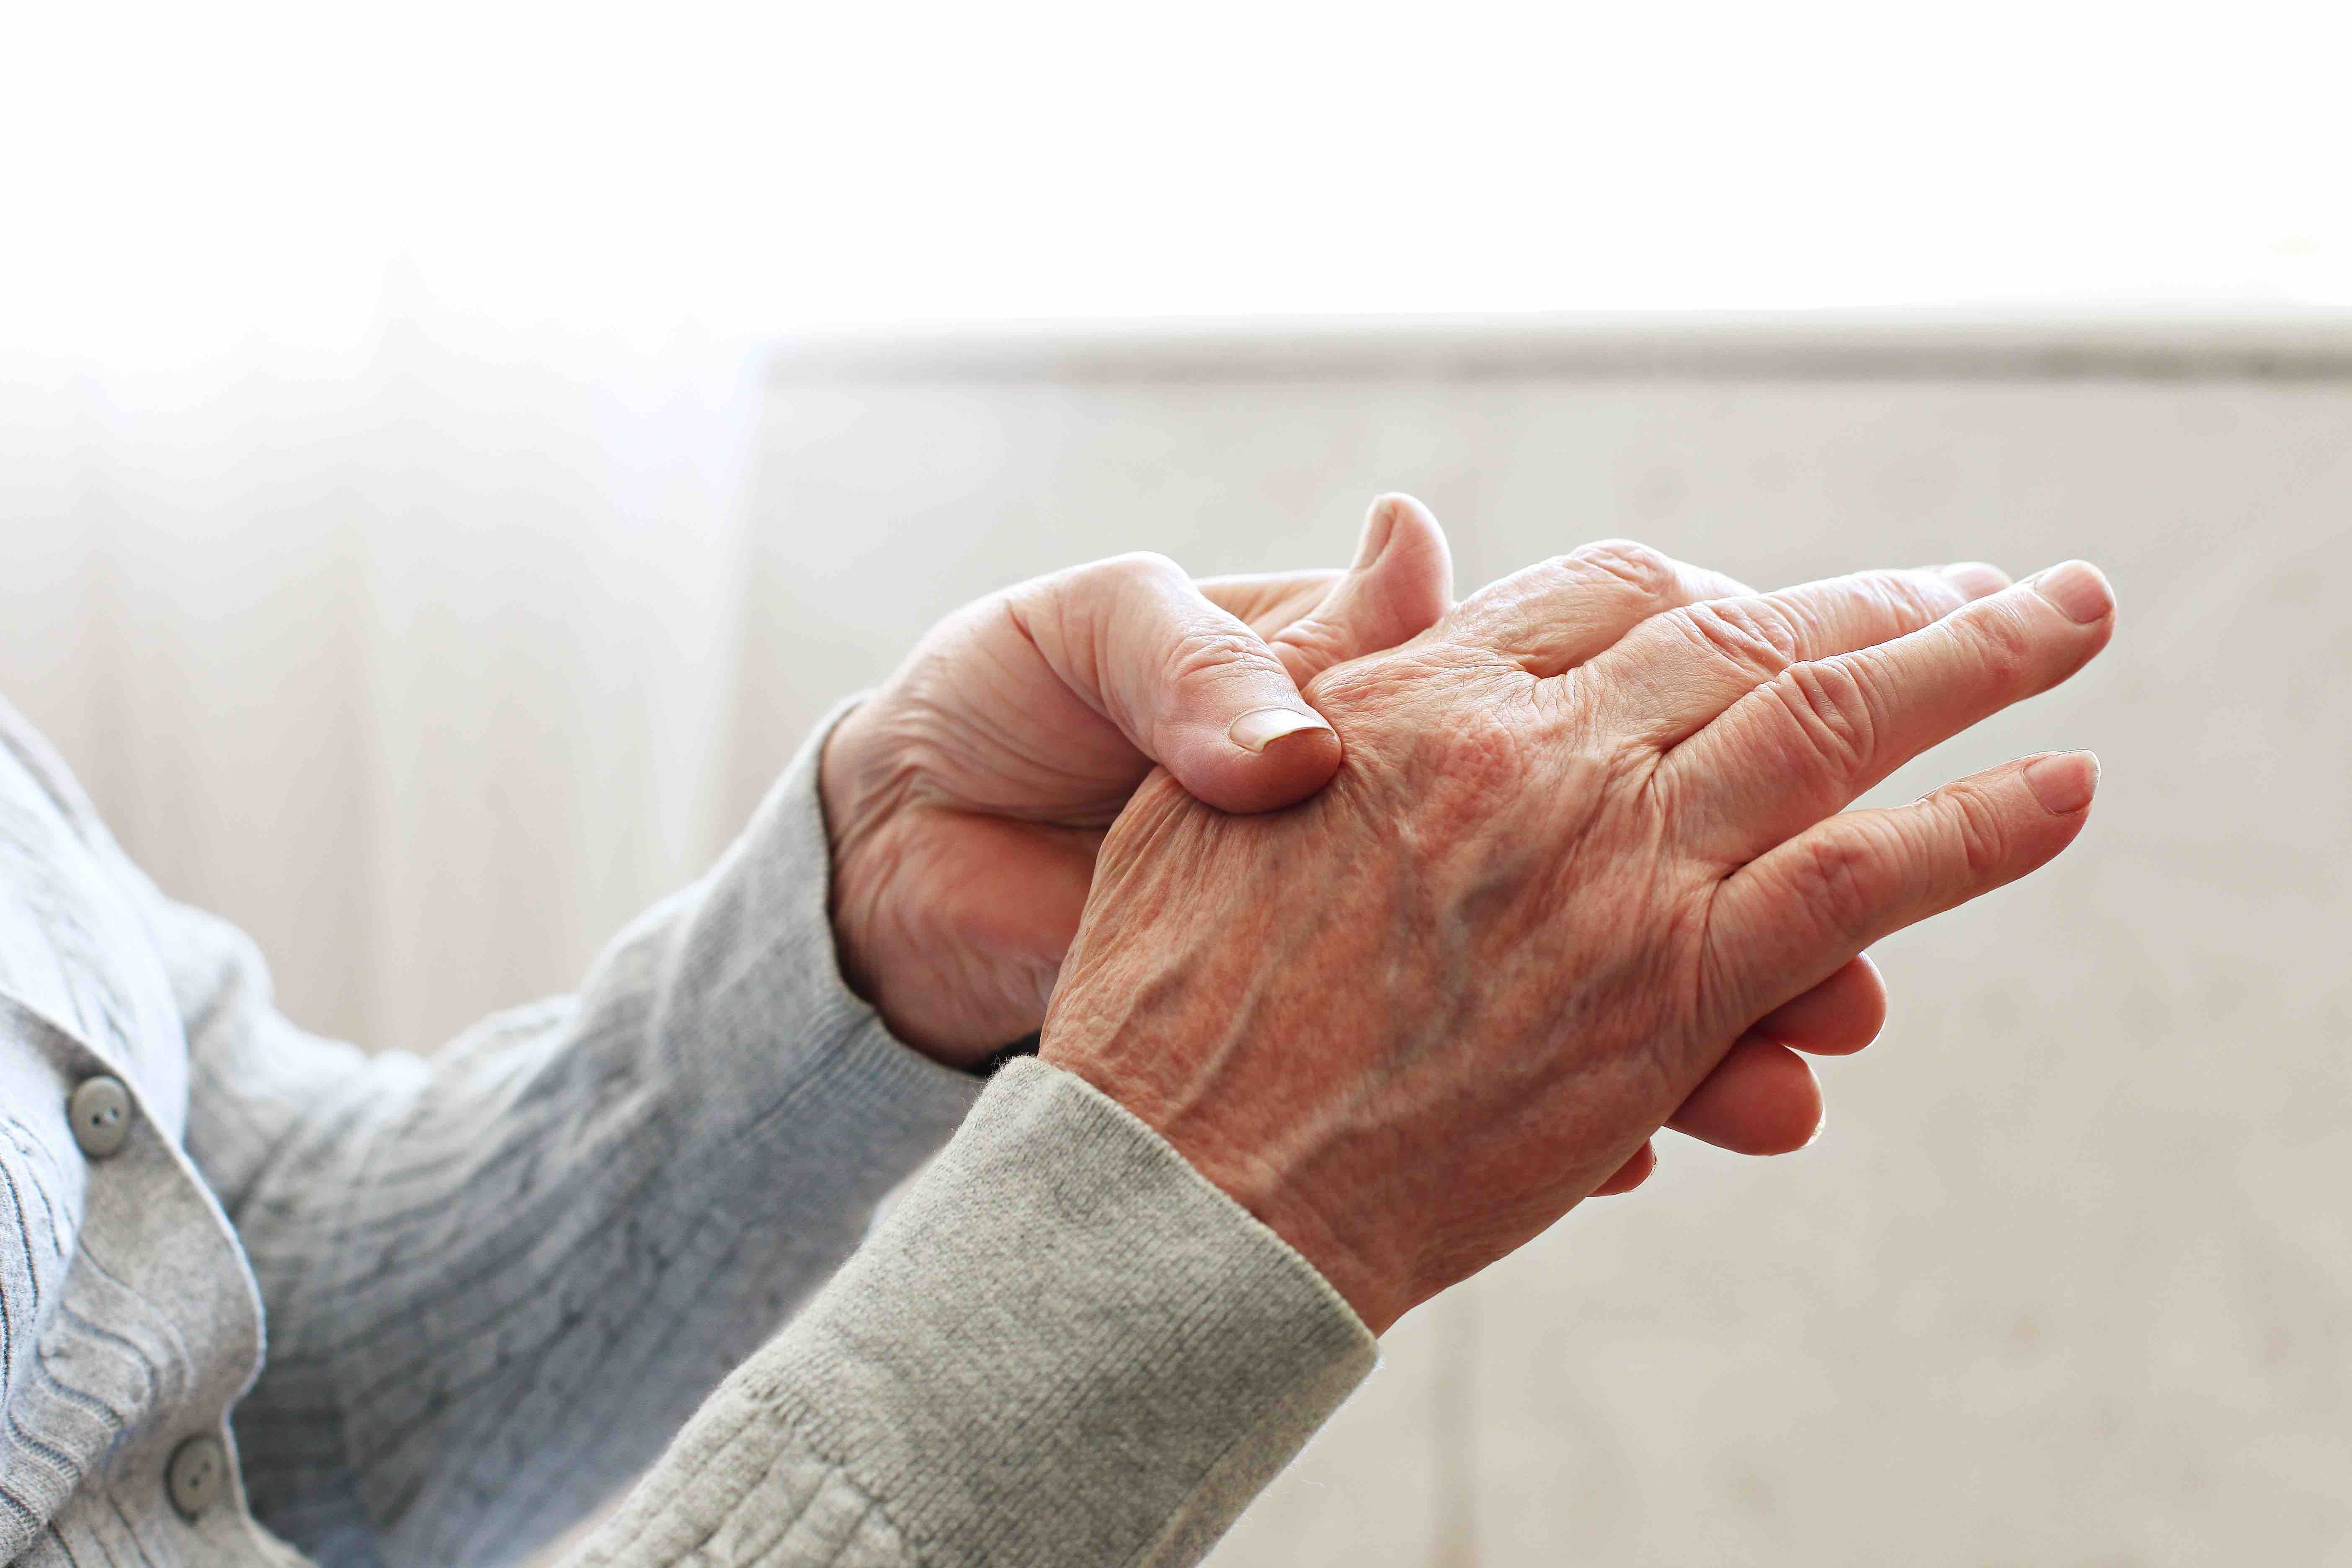 Patient rubbing sore hands with rheumatoid arthritis | Image credit: Evrymmnt - stock.adobe.com